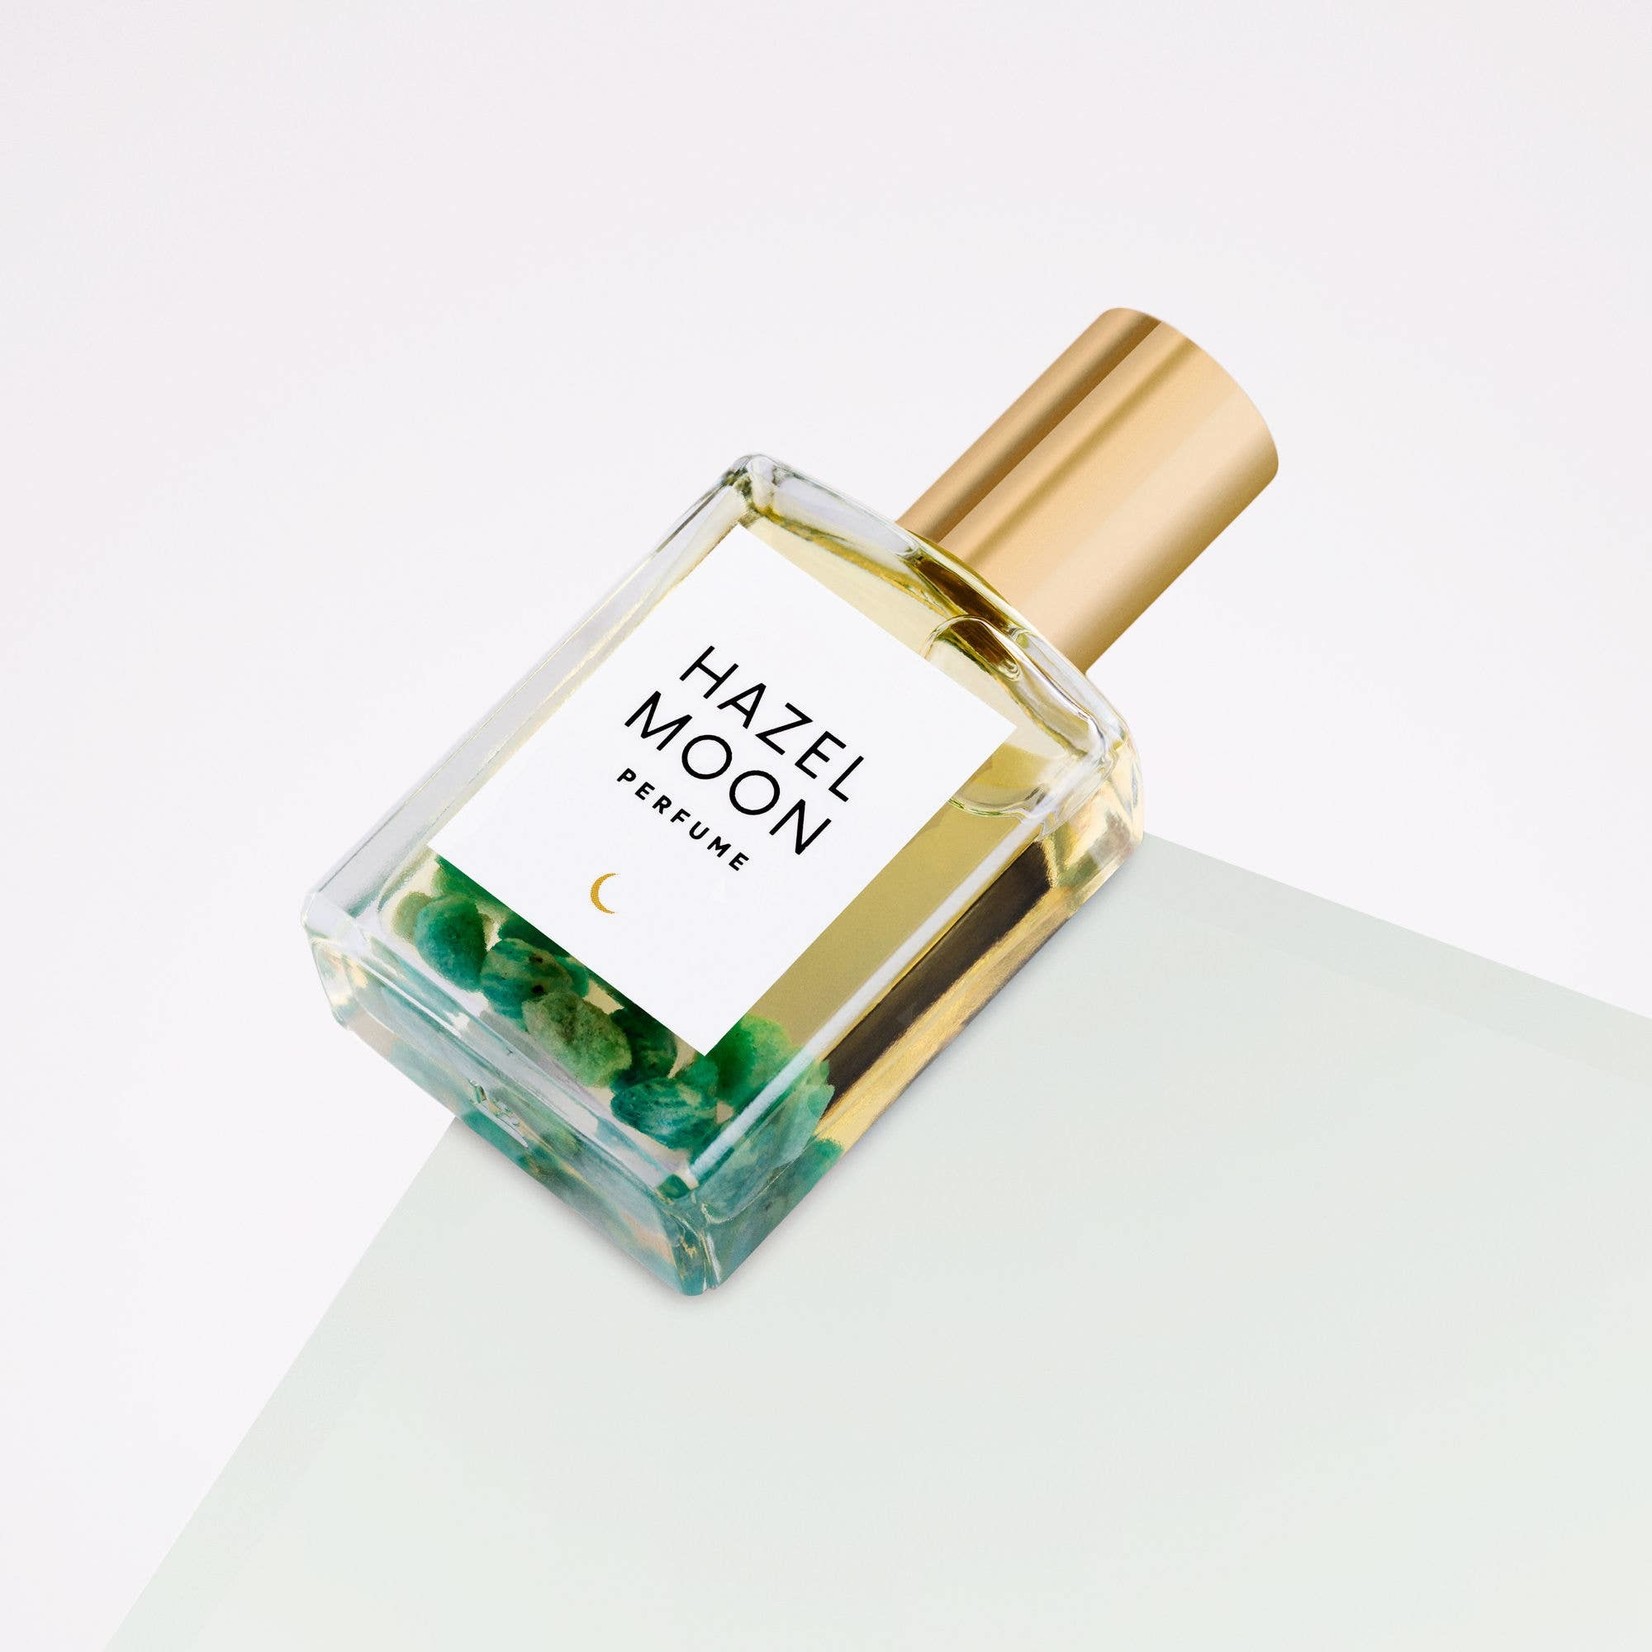 Olivine Atelier 13 Moons - Perfume Oil